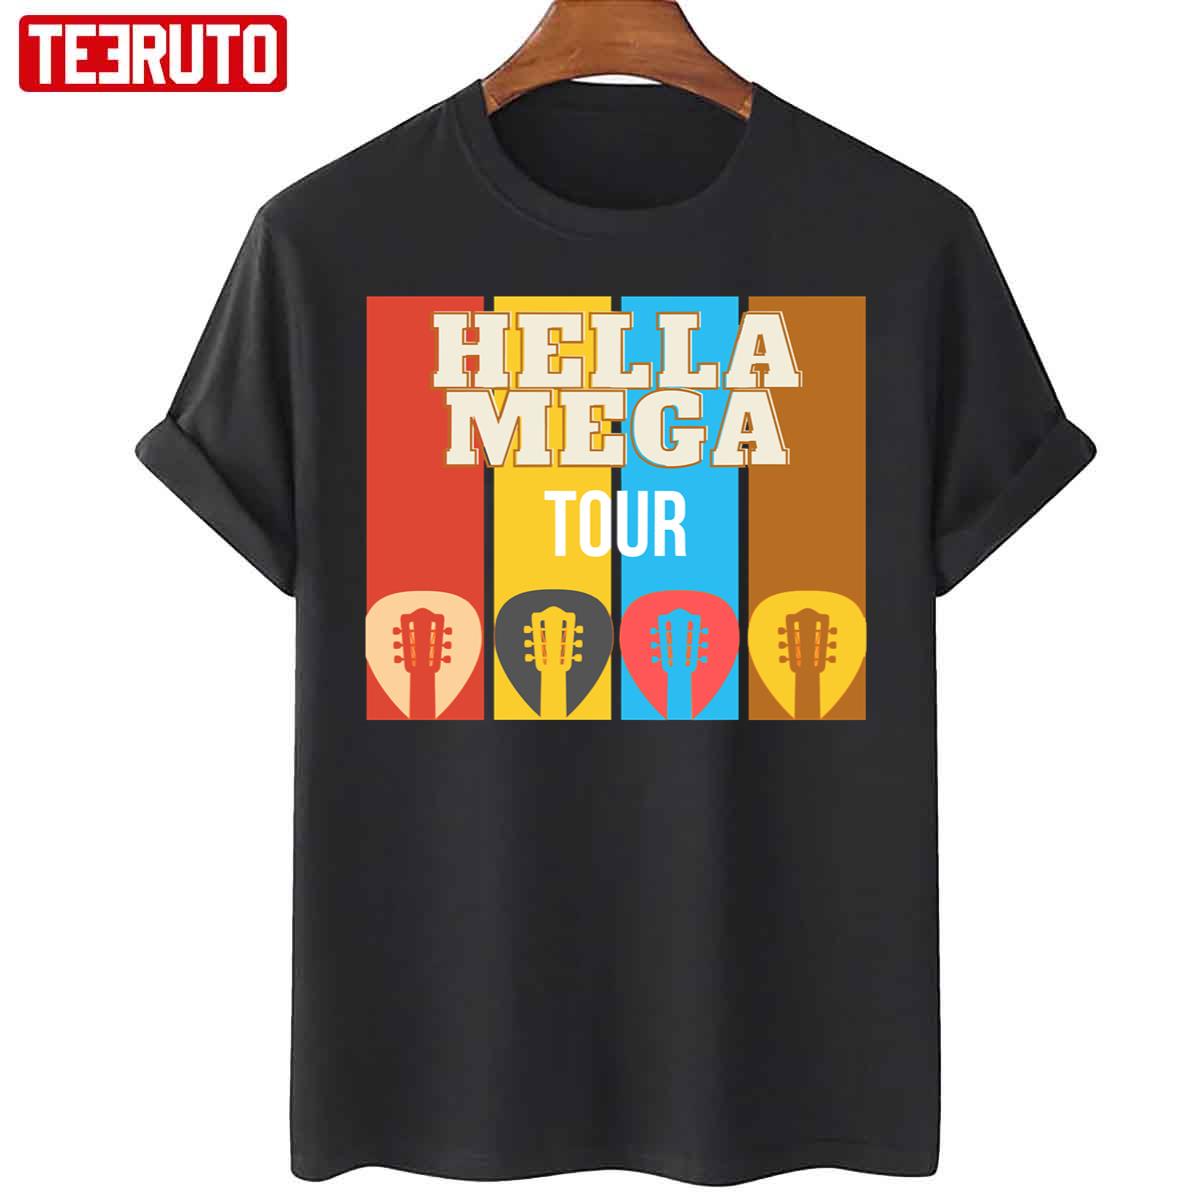 Hella Mega Tour Guitars Rock Bands Retro Art Unisex T-Shirt